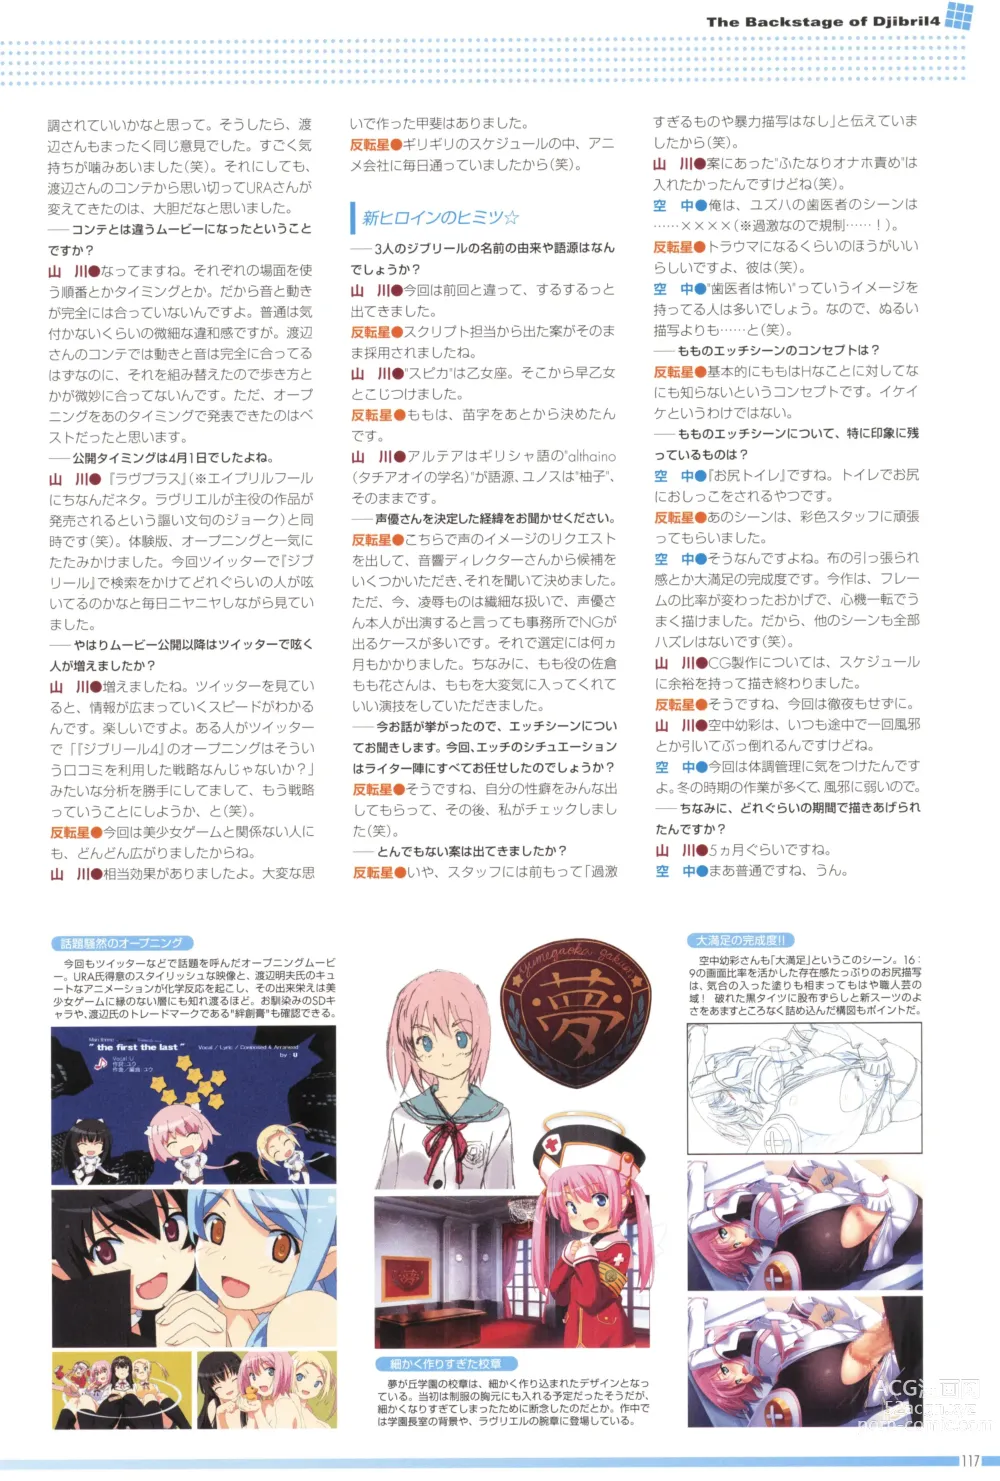 Page 121 of manga Makai Tenshi Djibril 4 Official Fanbook